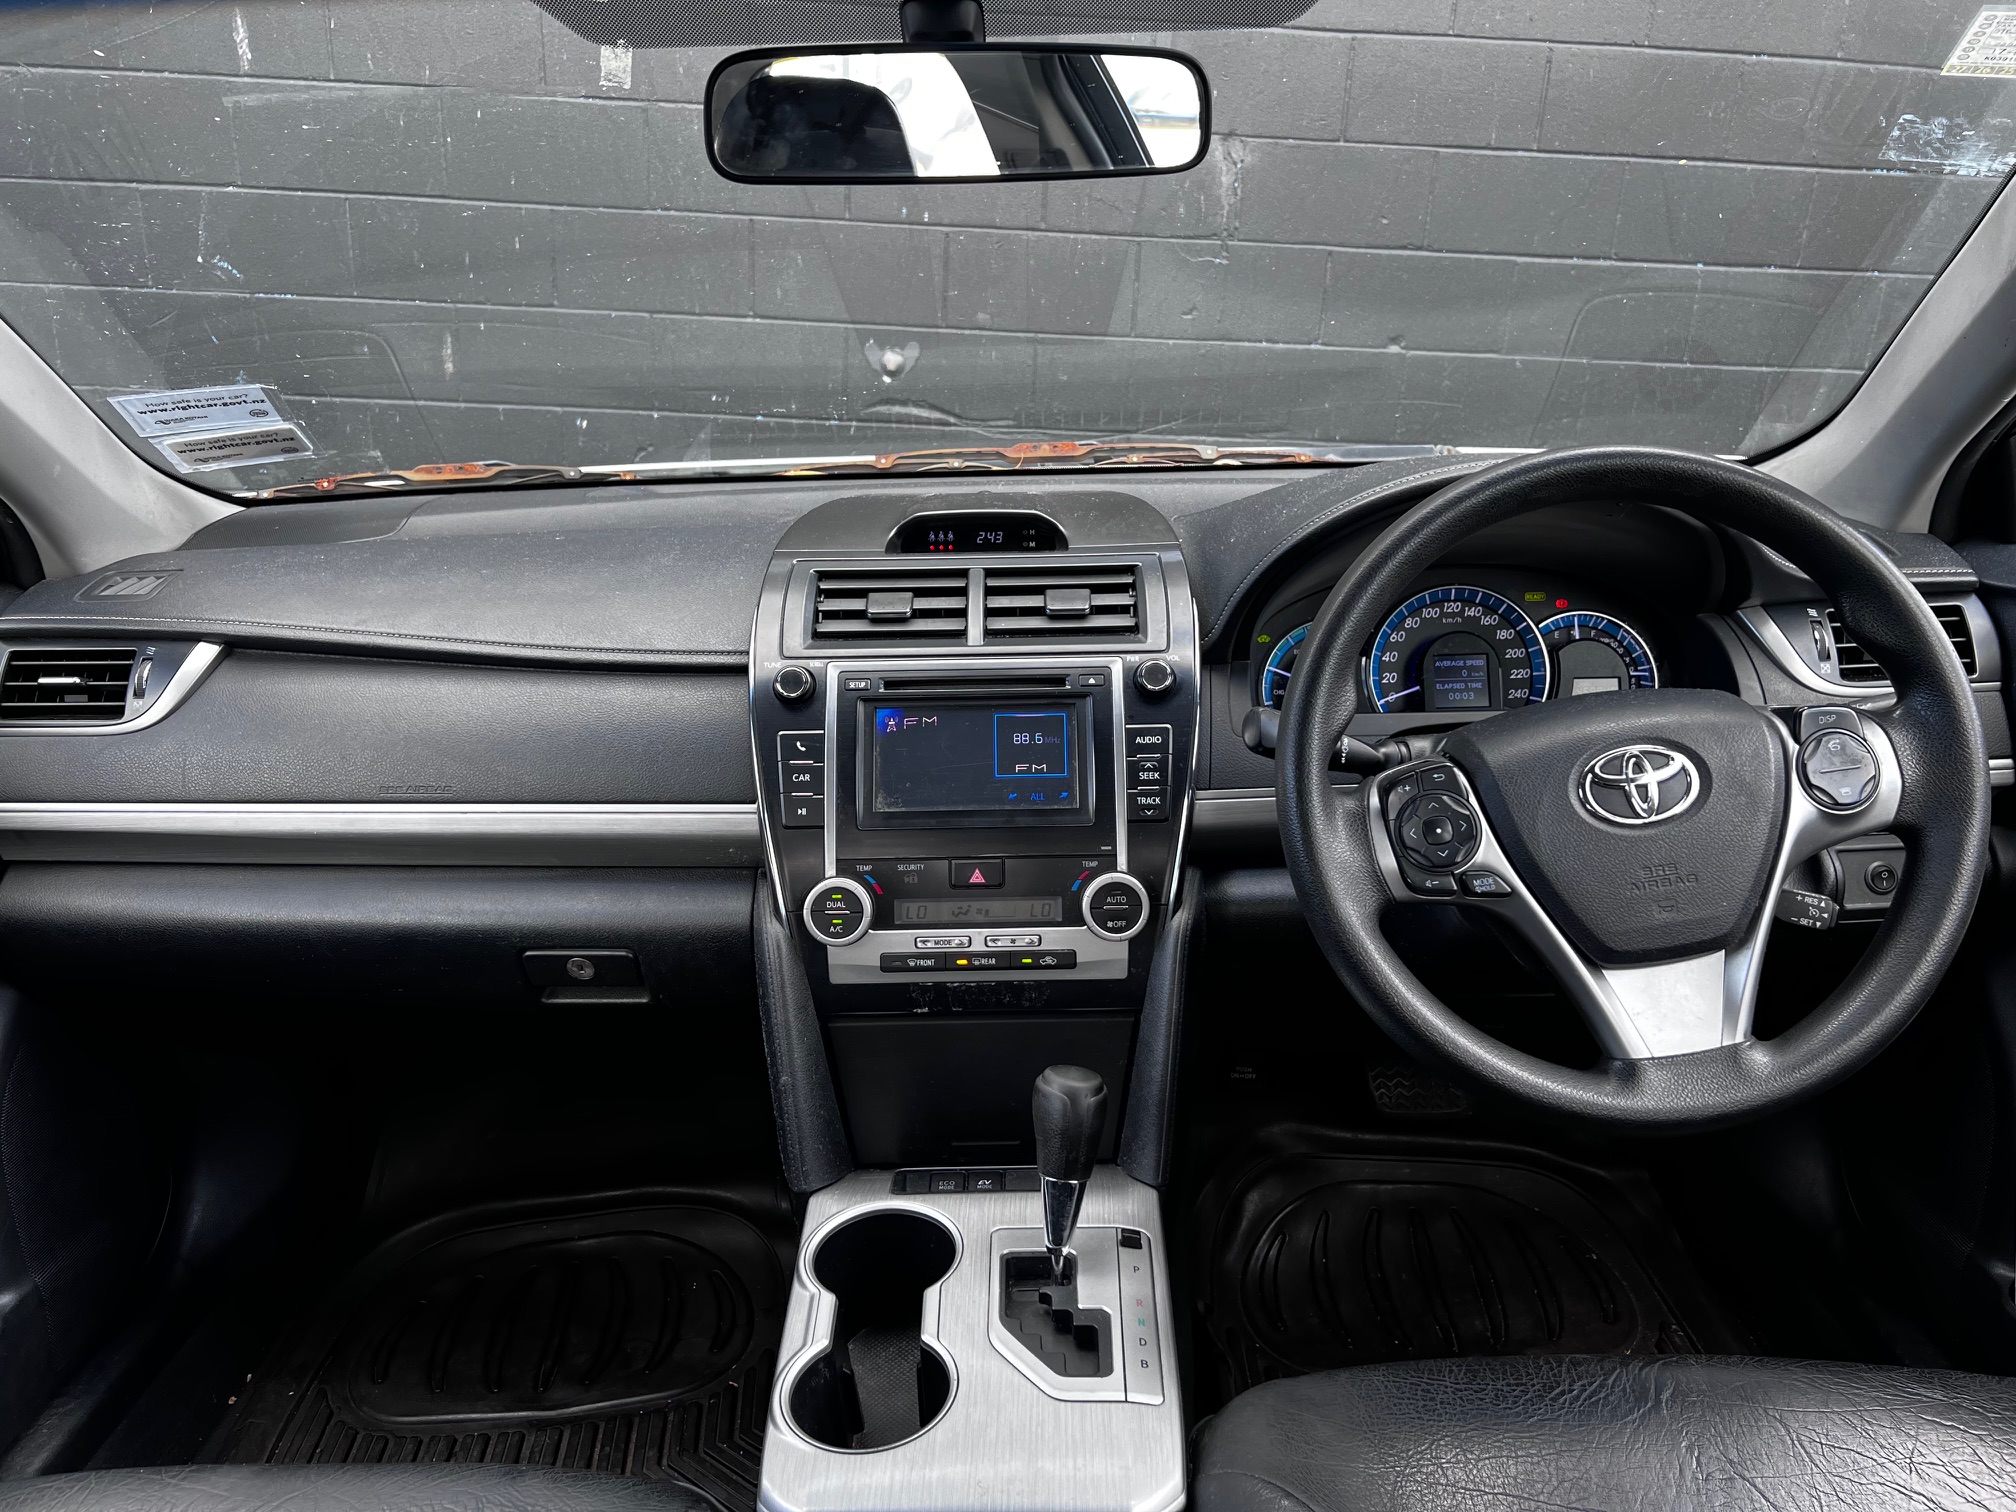 Toyota Camry 2012 Image 13